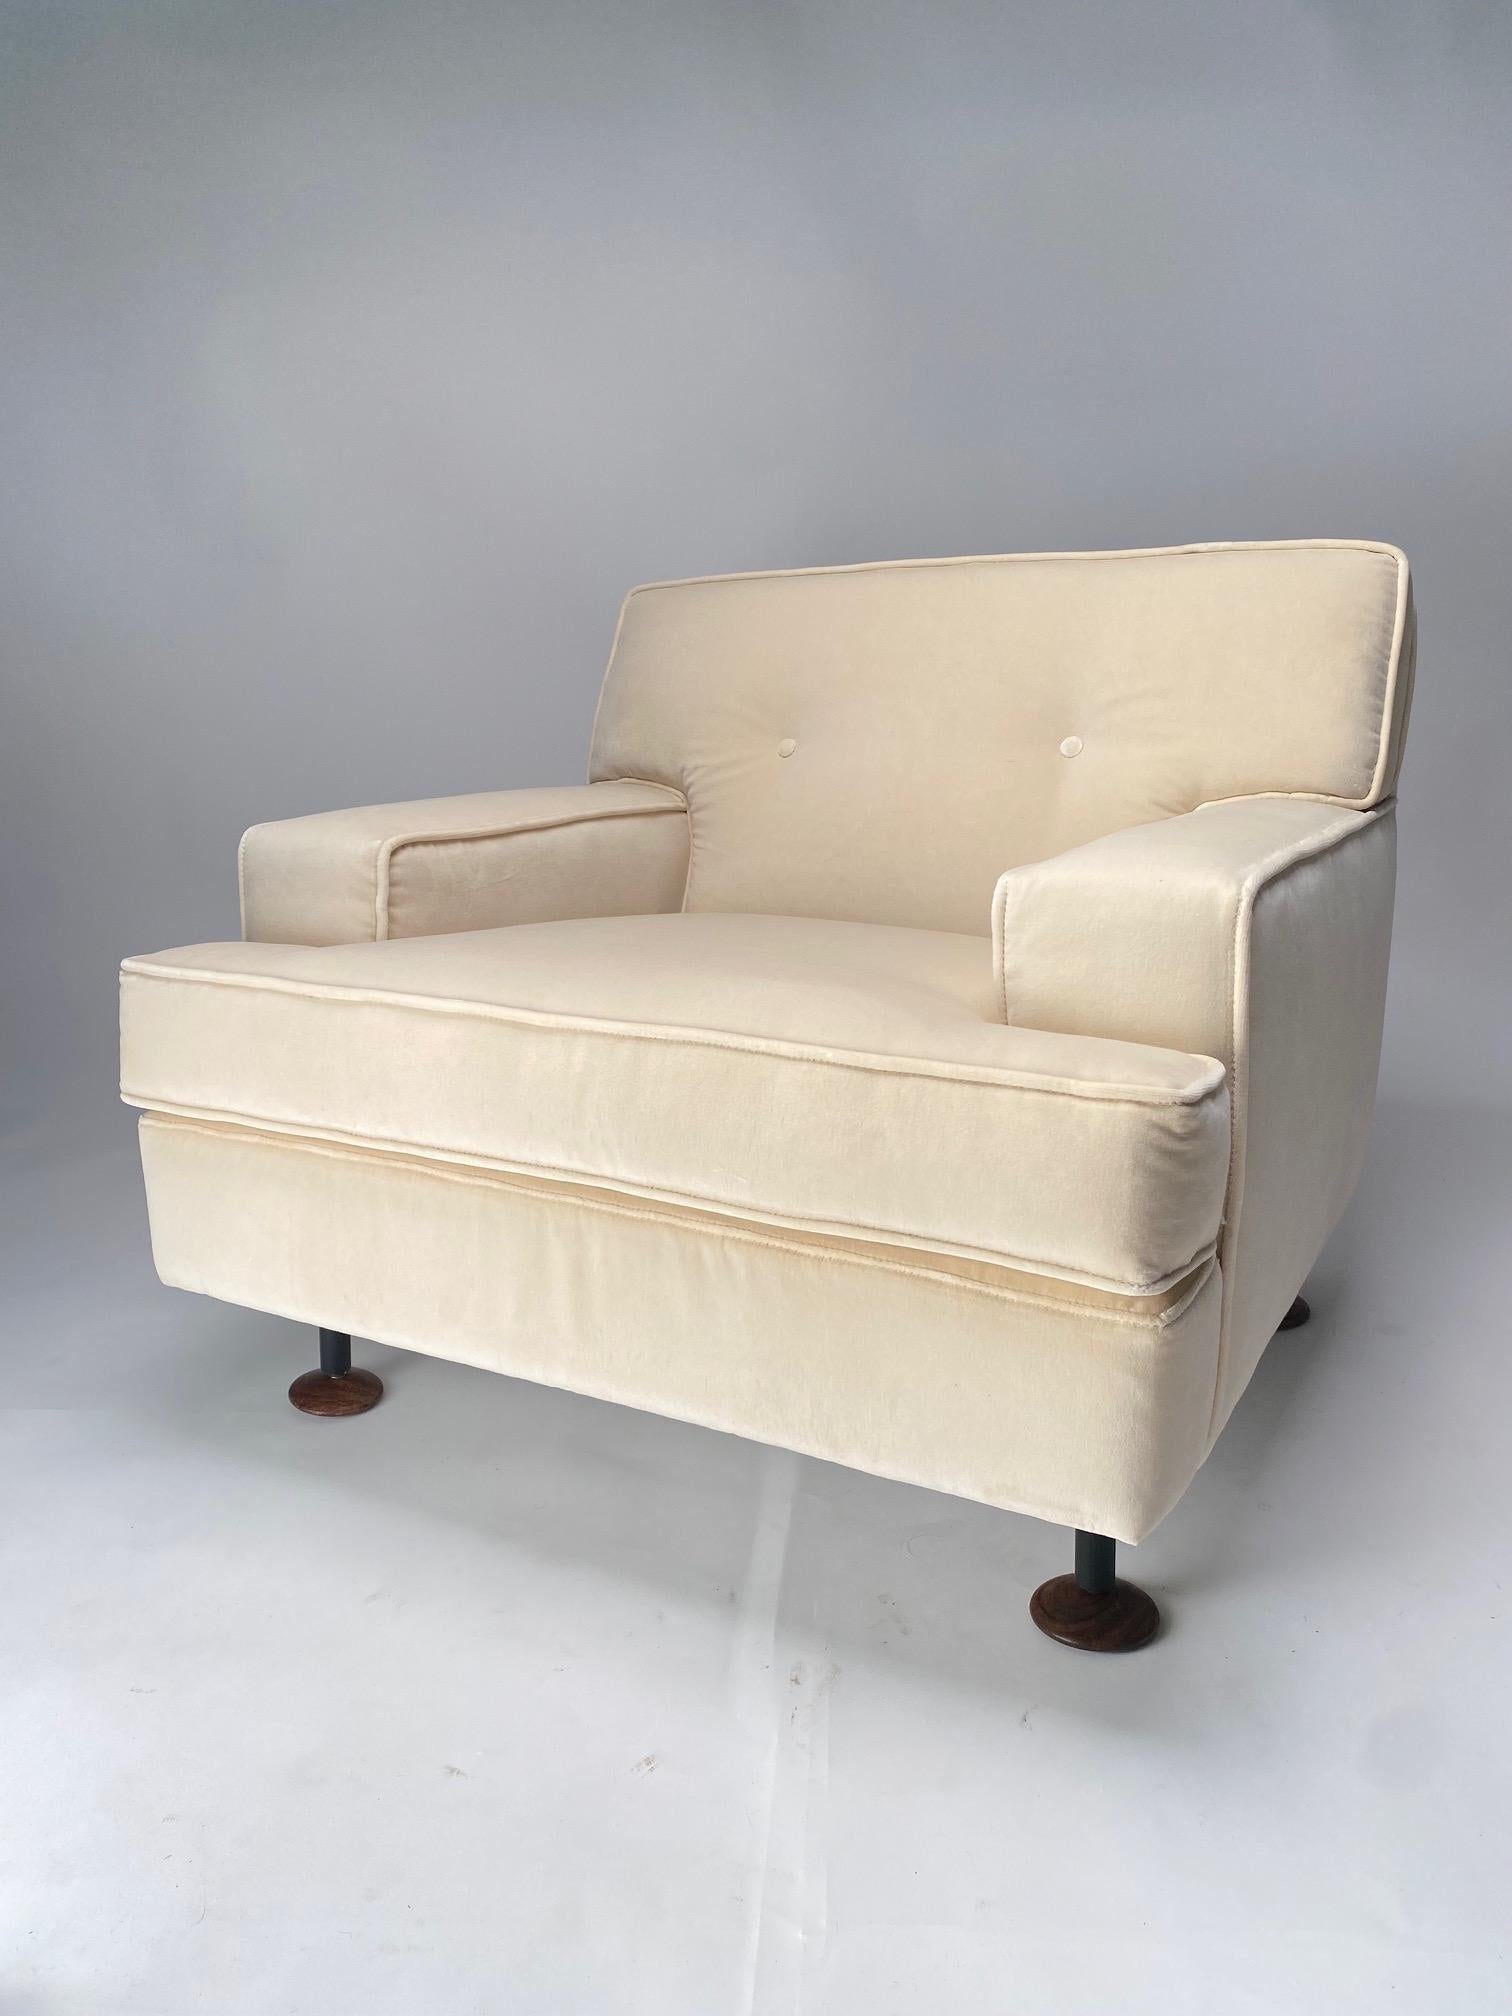 Marco Zanuso 'Square' White Velvet Chairs with Teak Feet, Italy, circa 1962 For Sale 4